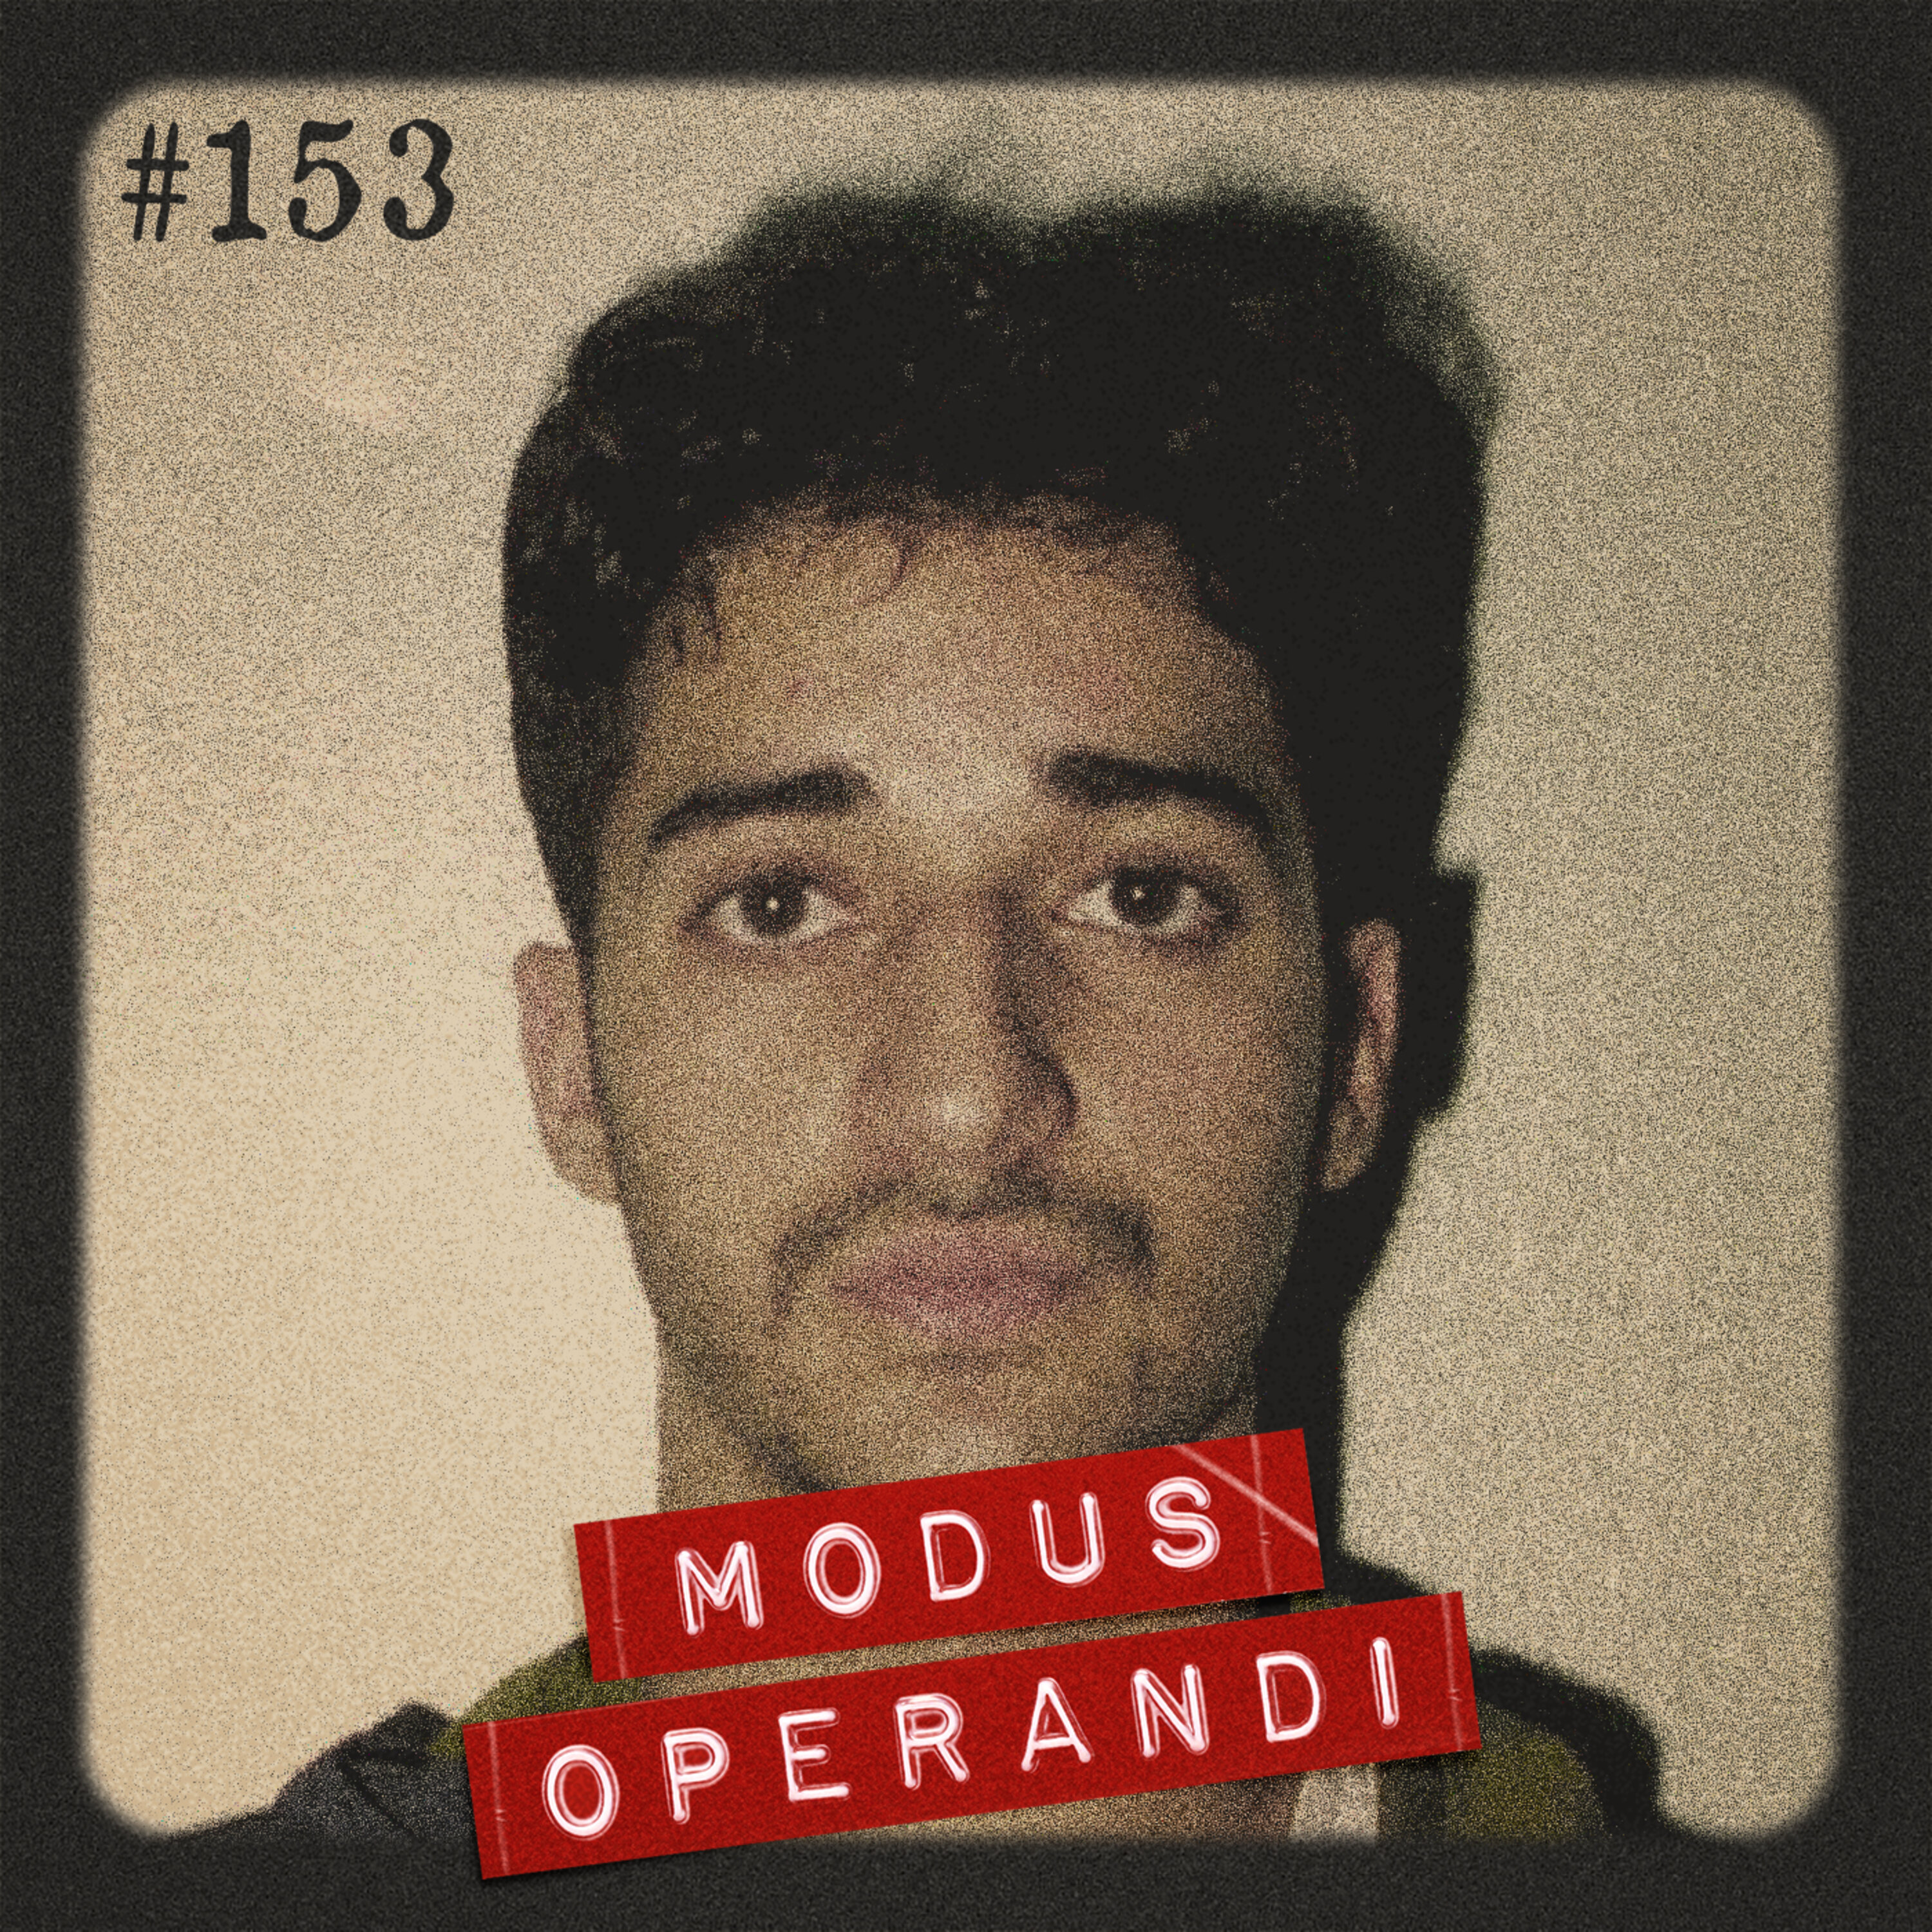 #153 - Adnan Syed: erro da justiça? | Parte 2